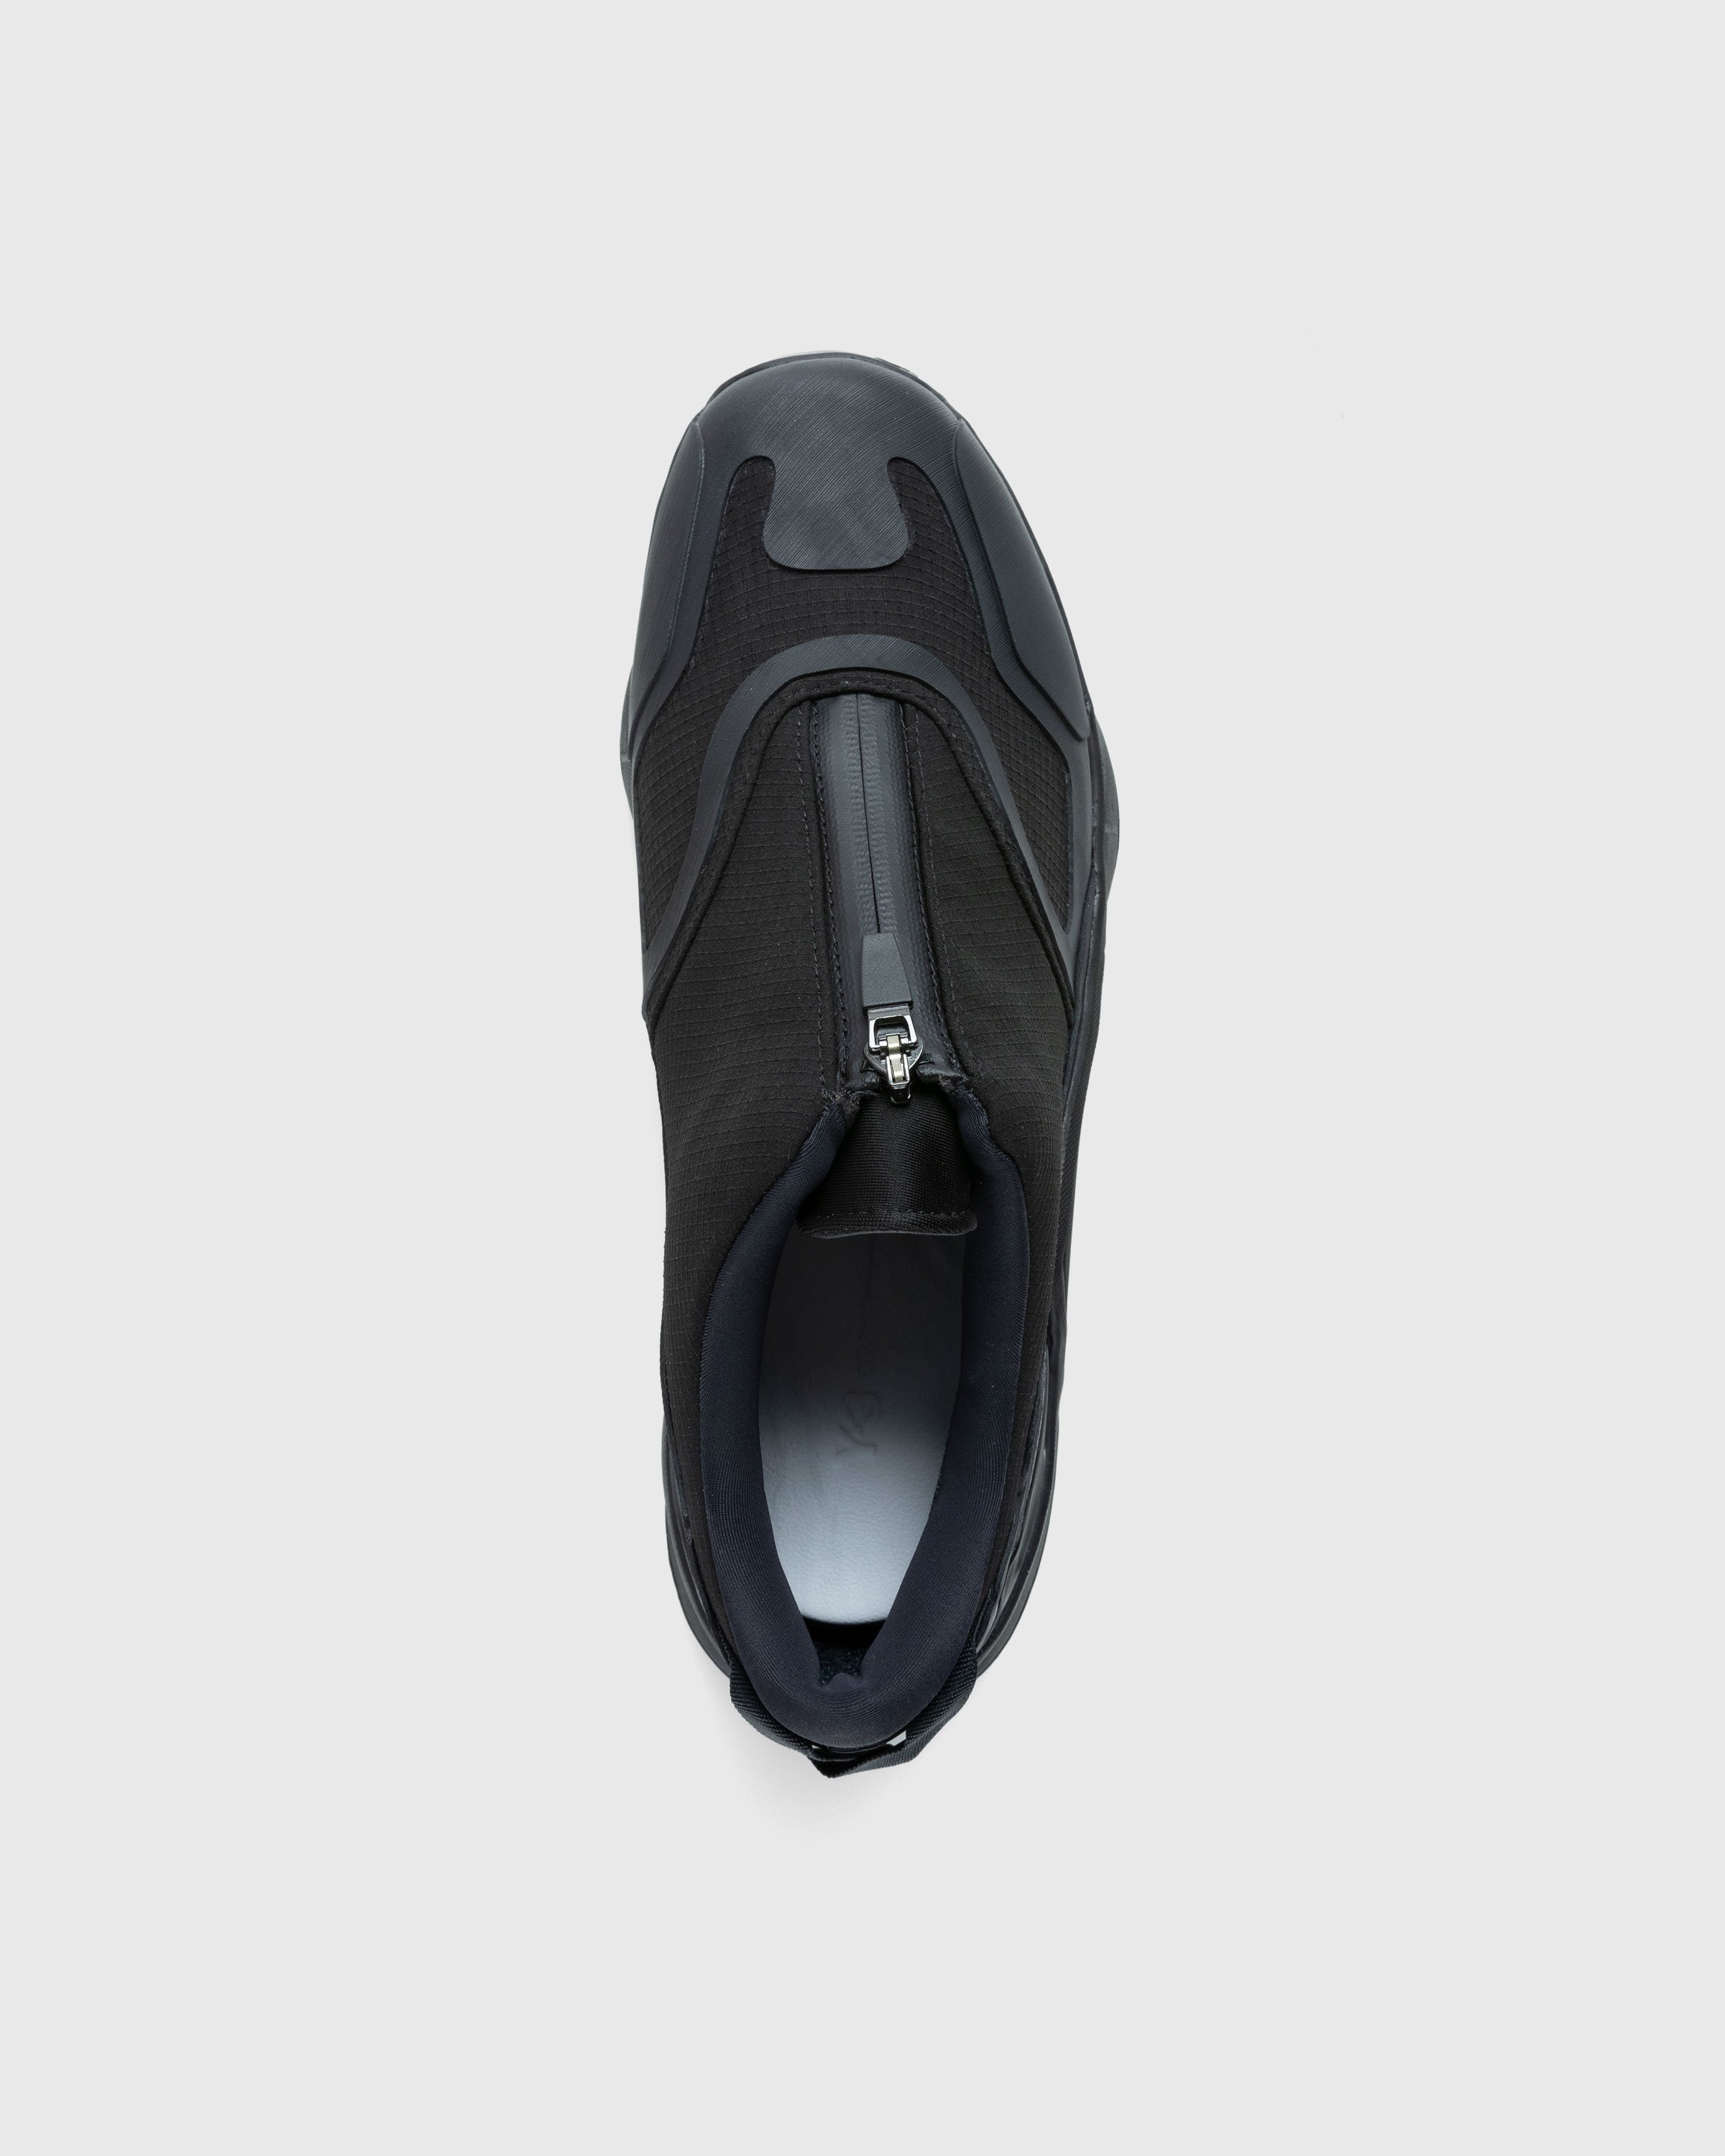 Y-3 - Terrex Swift R3 GORE-TEX - Footwear - Black - Image 5